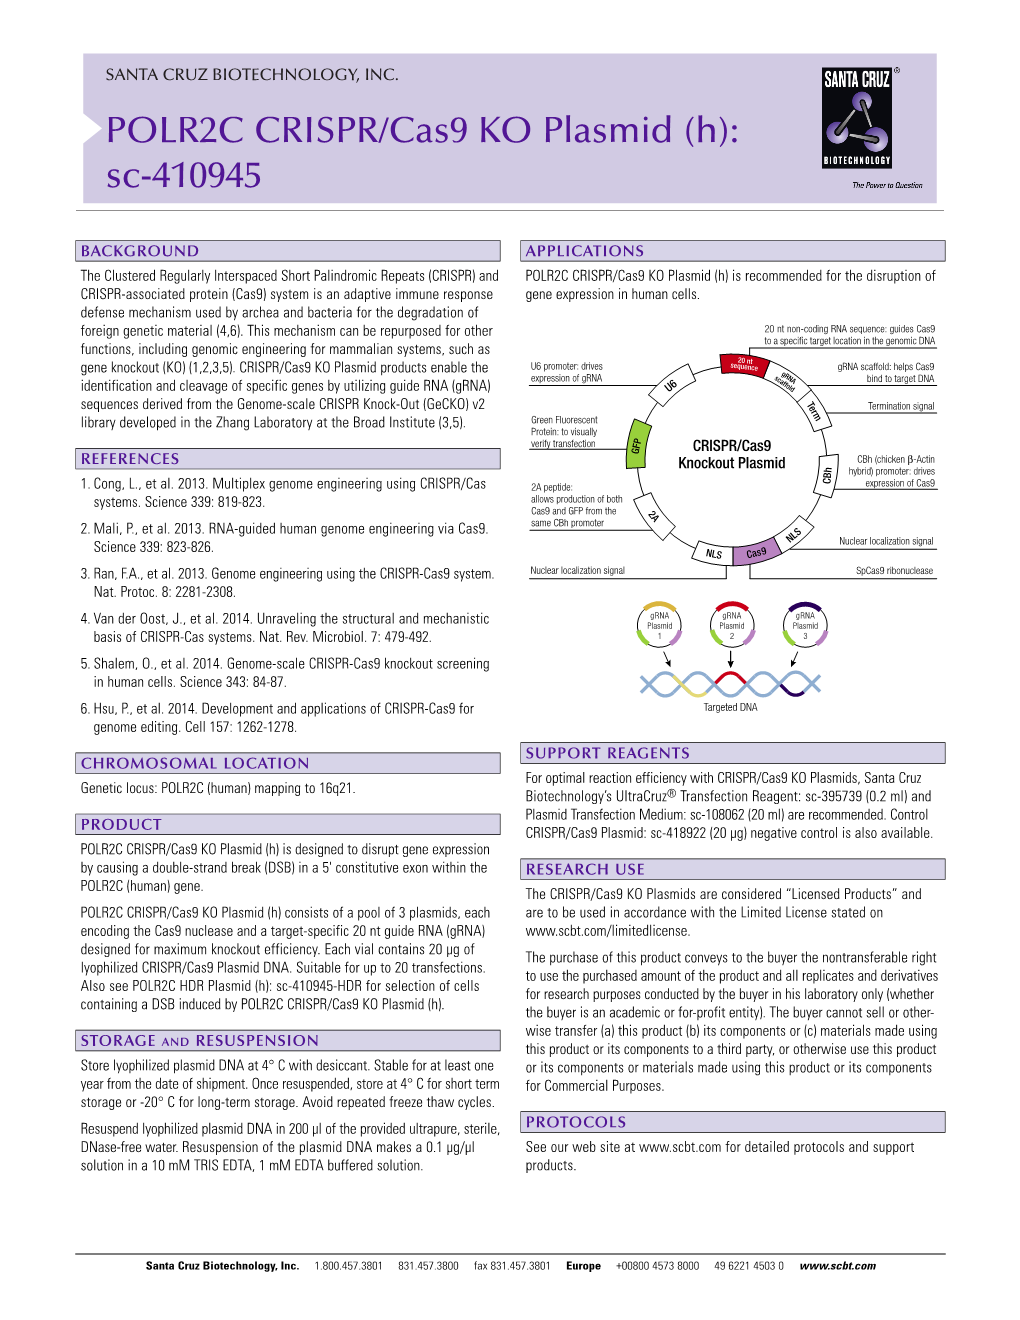 POLR2C CRISPR/Cas9 KO Plasmid (H): Sc-410945